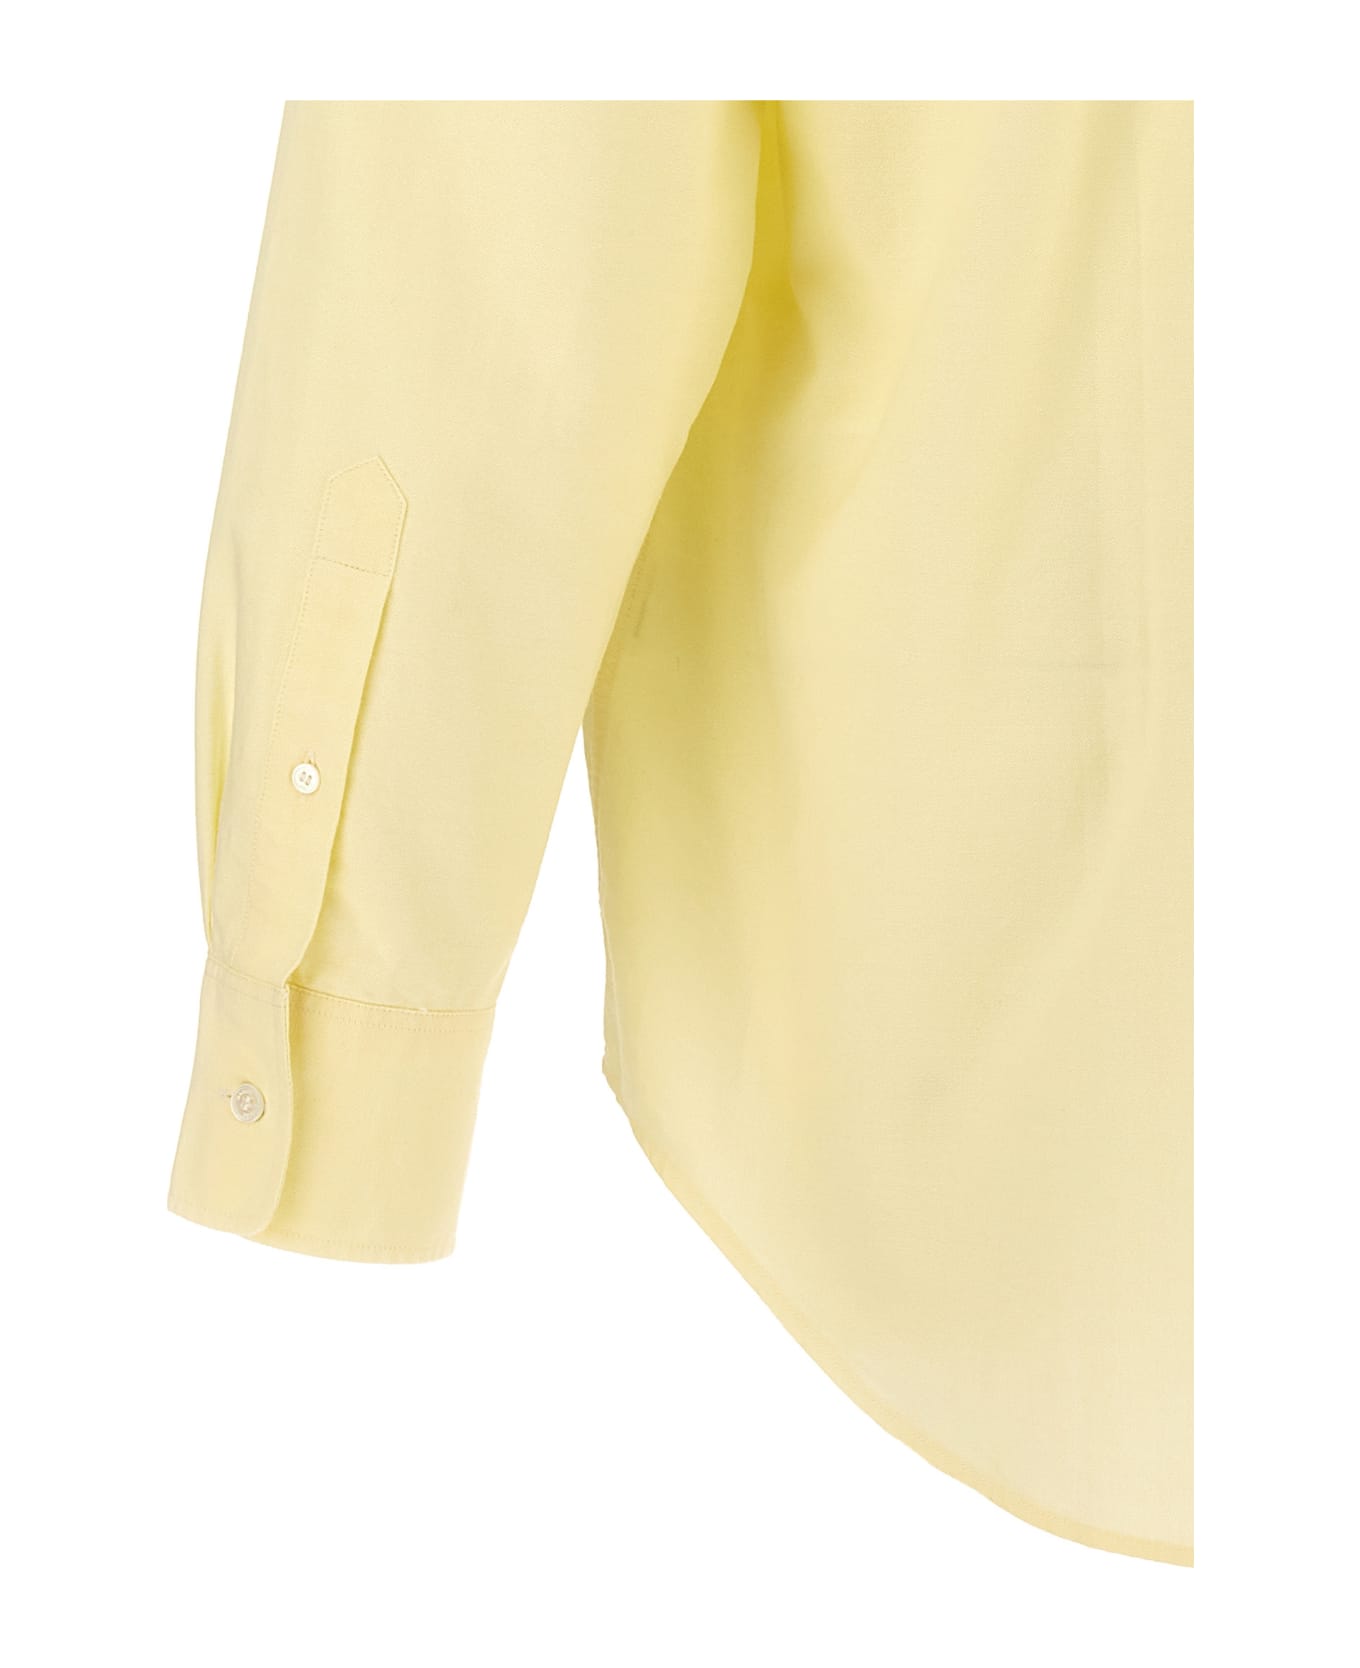 Maison Kitsuné 'contour Fox Head Skate' Shirt - Yellow